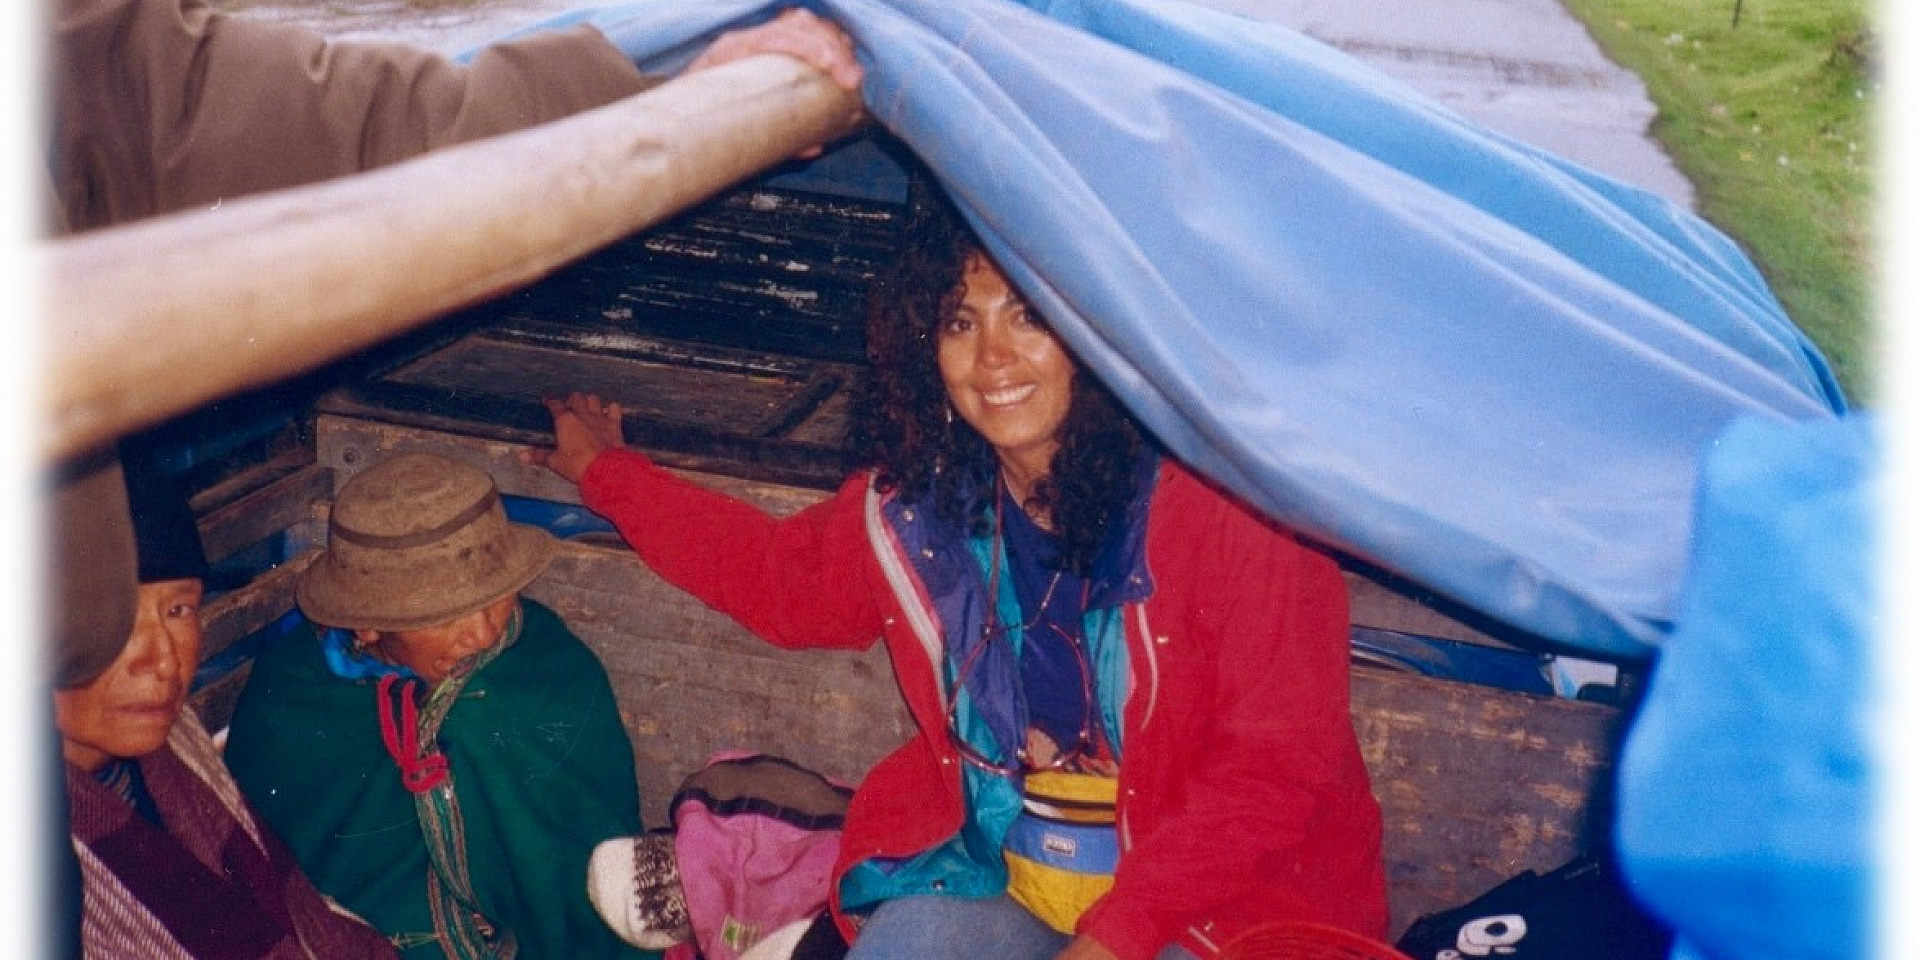 Ana Maria Peredo under a tent